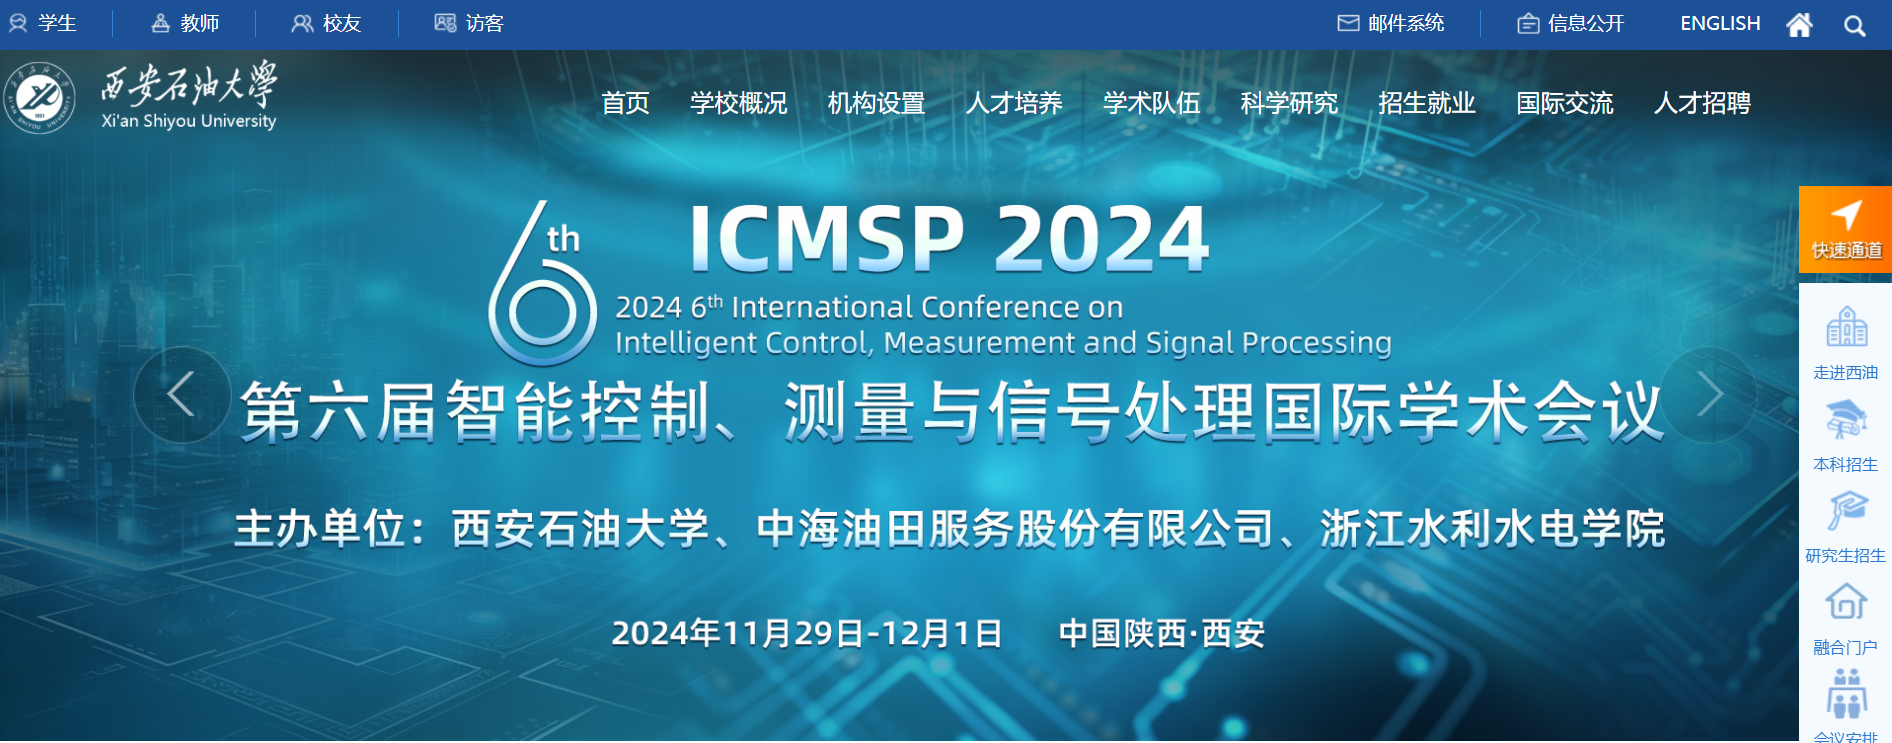 ICMSP2024上线学校官网截图.png